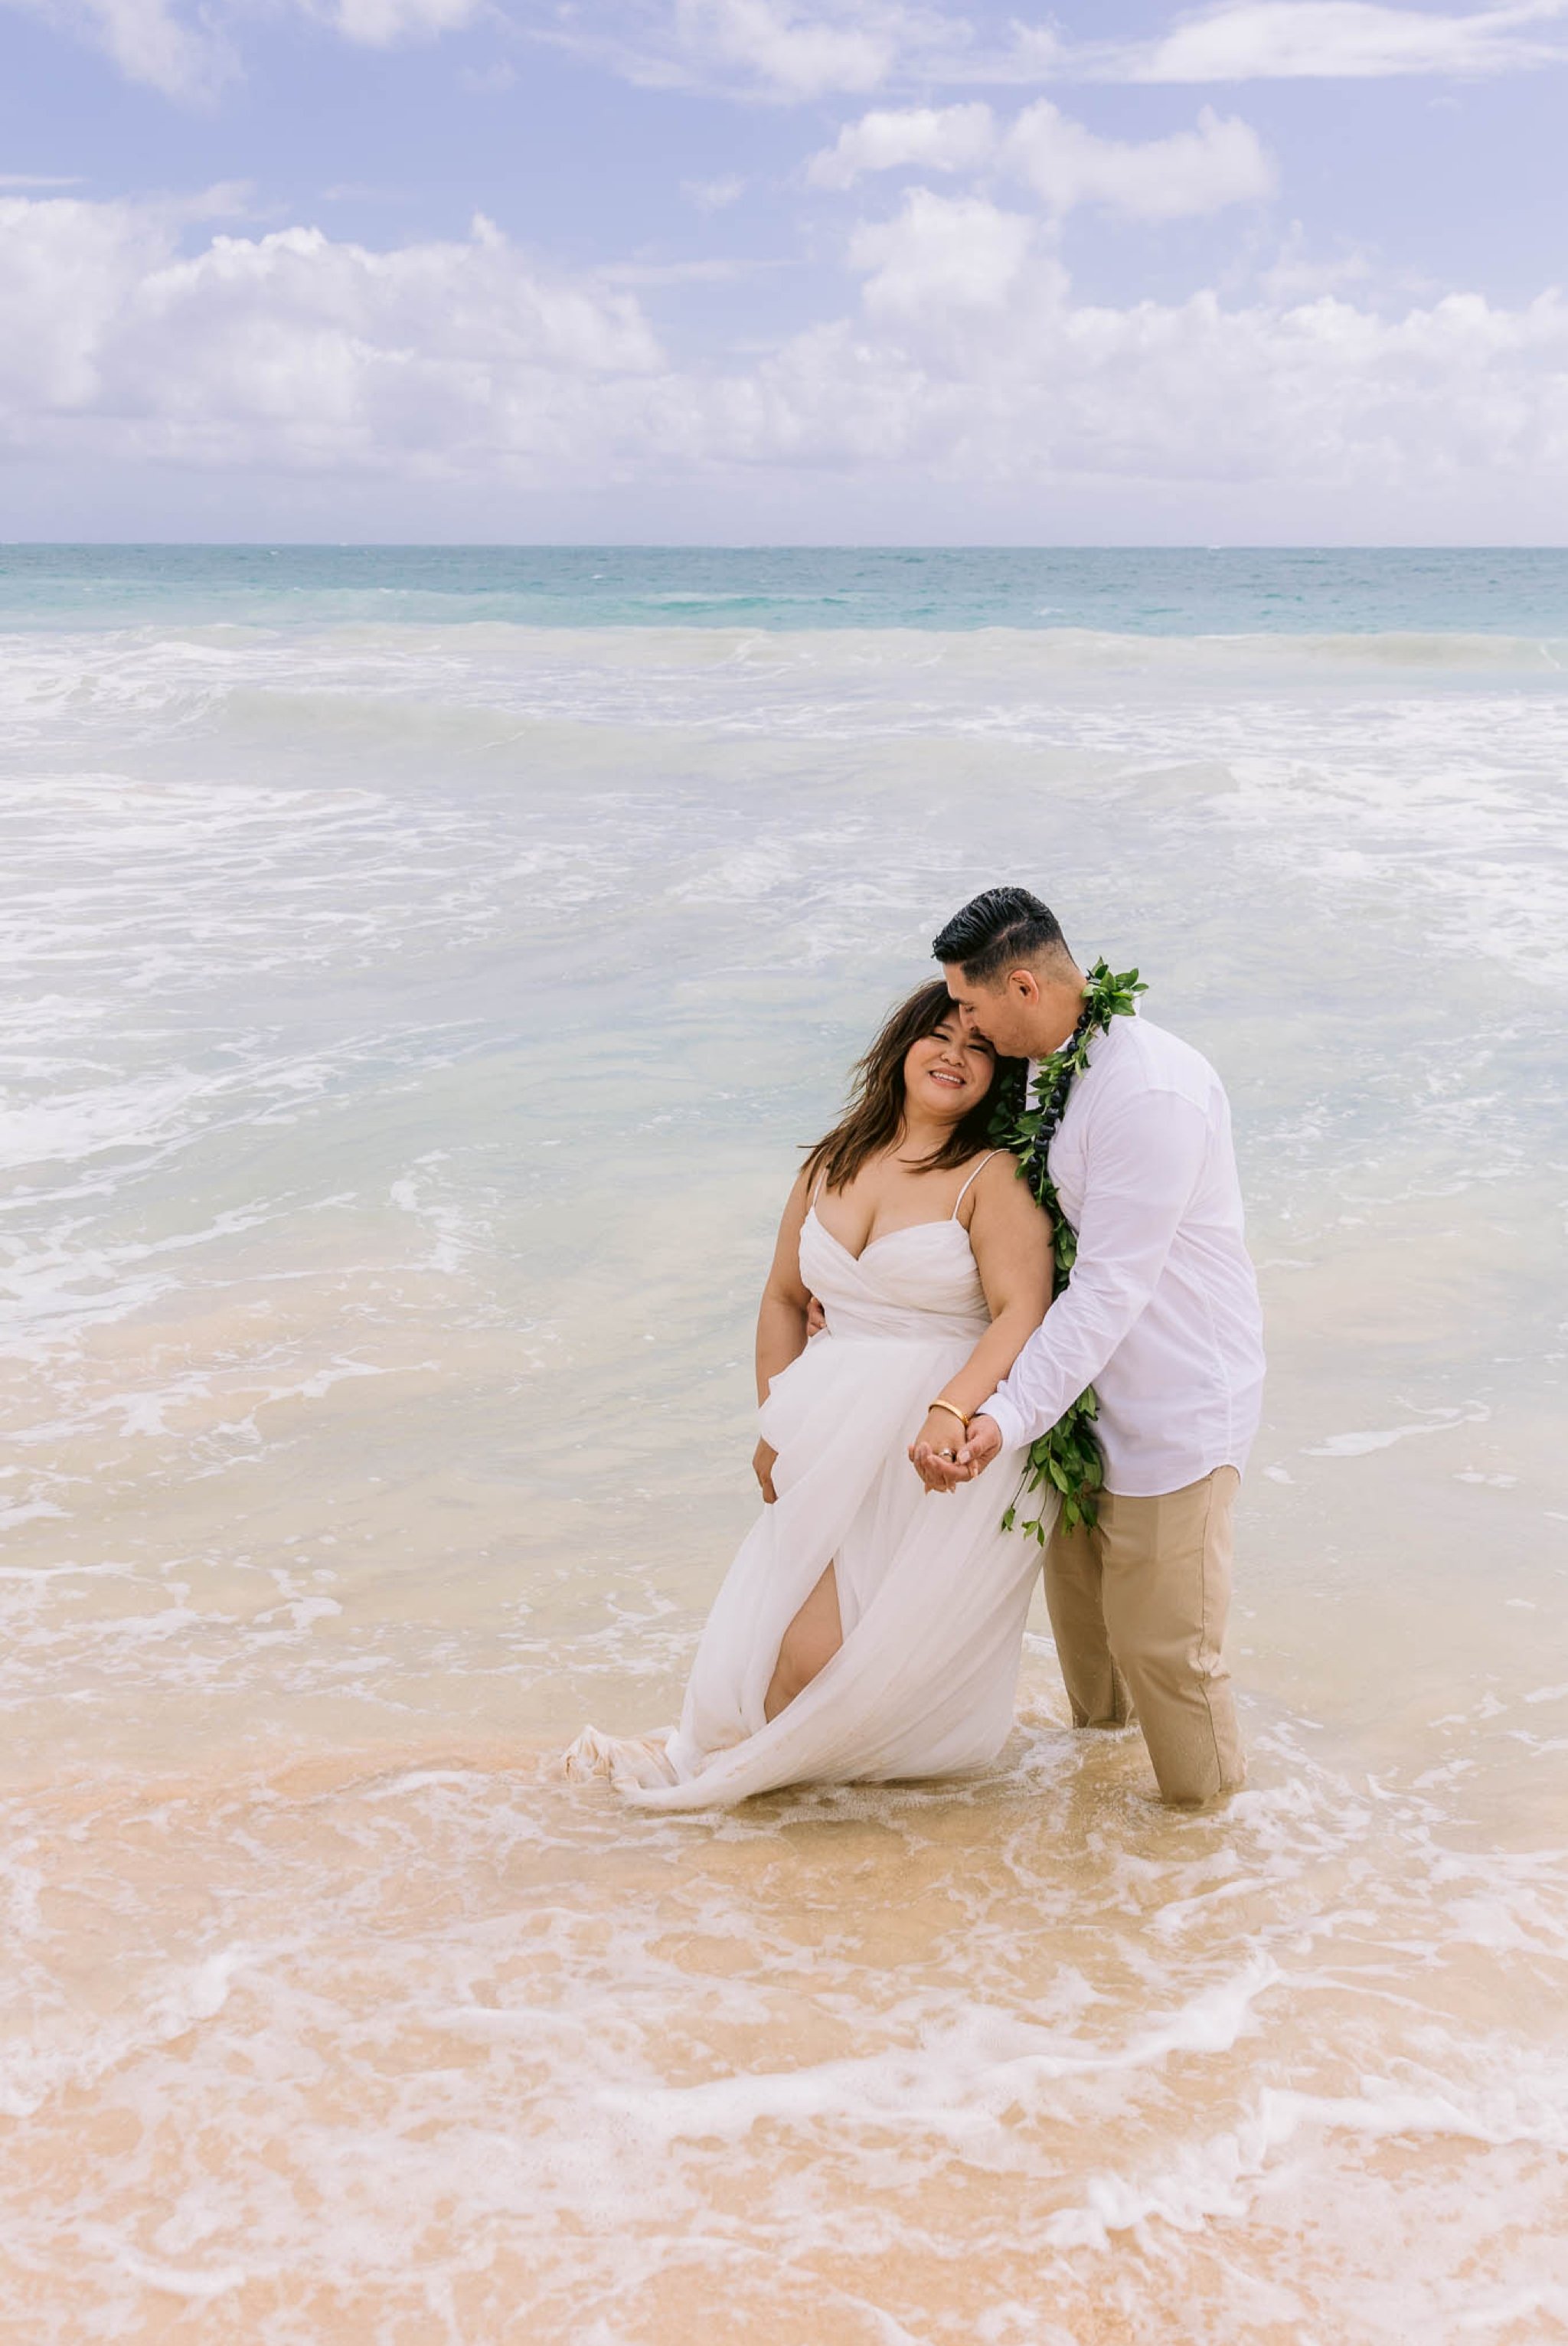 Amy + Joe - Elopement at Waimanalo Beach - Oahu Wedding Photographer